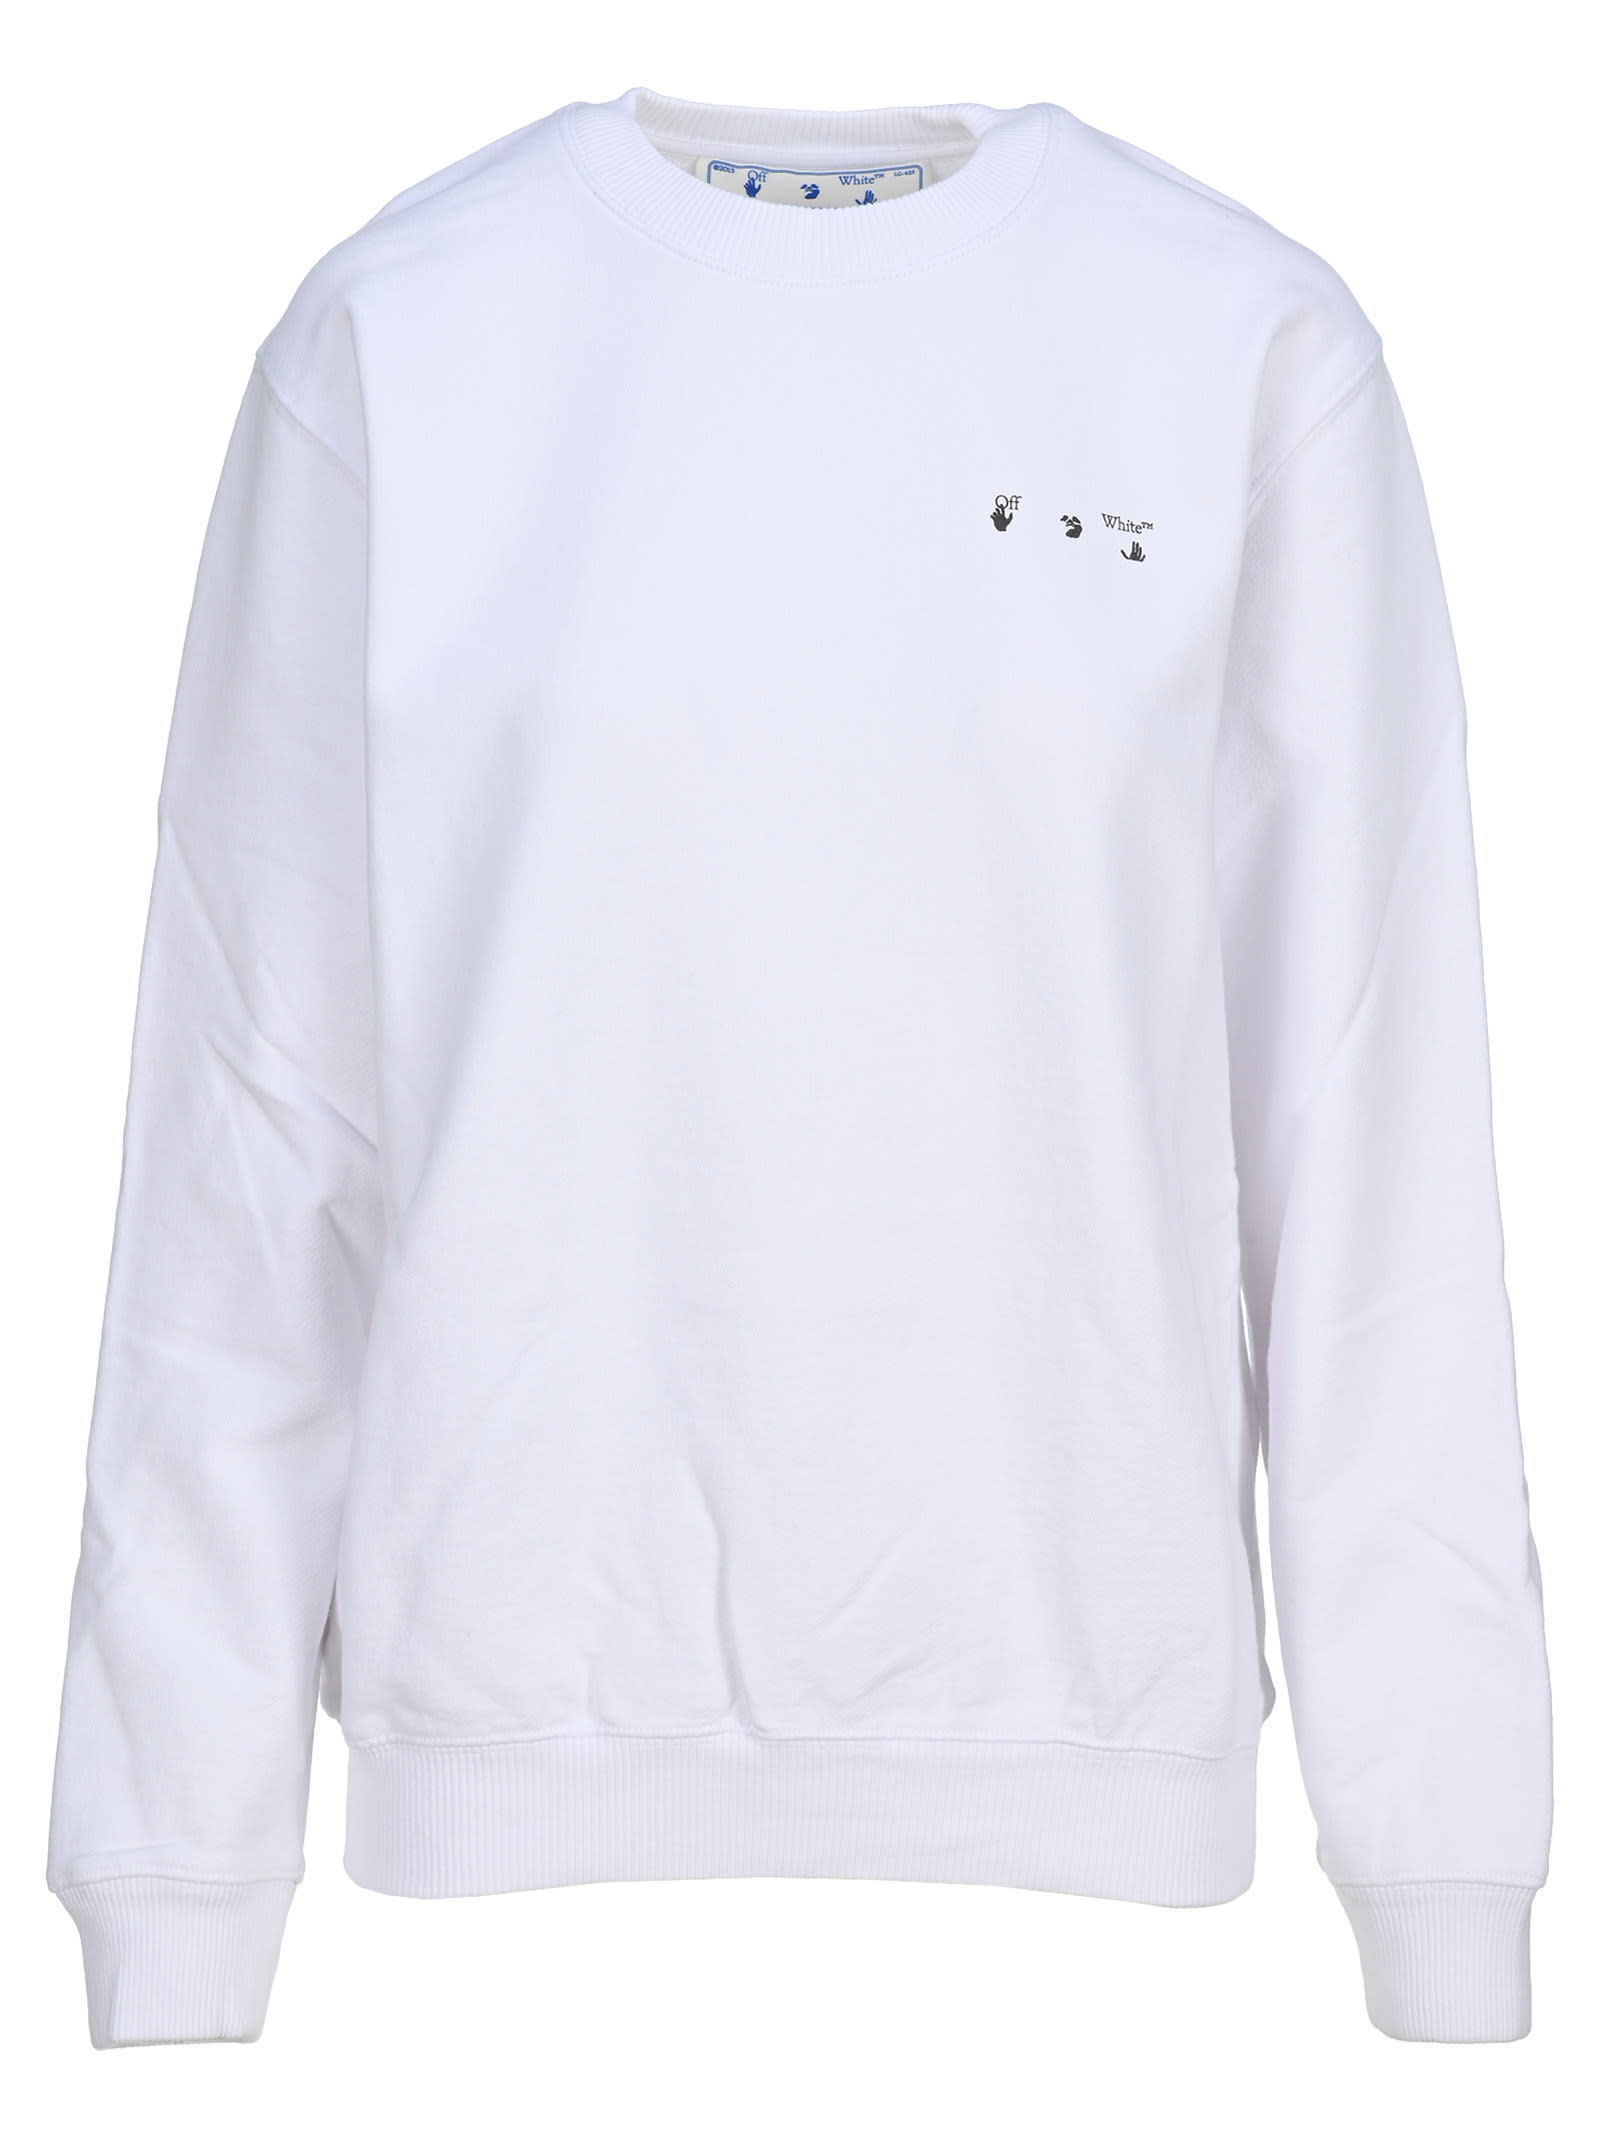 Off-White Off White Palace Arrow Sweatshirt